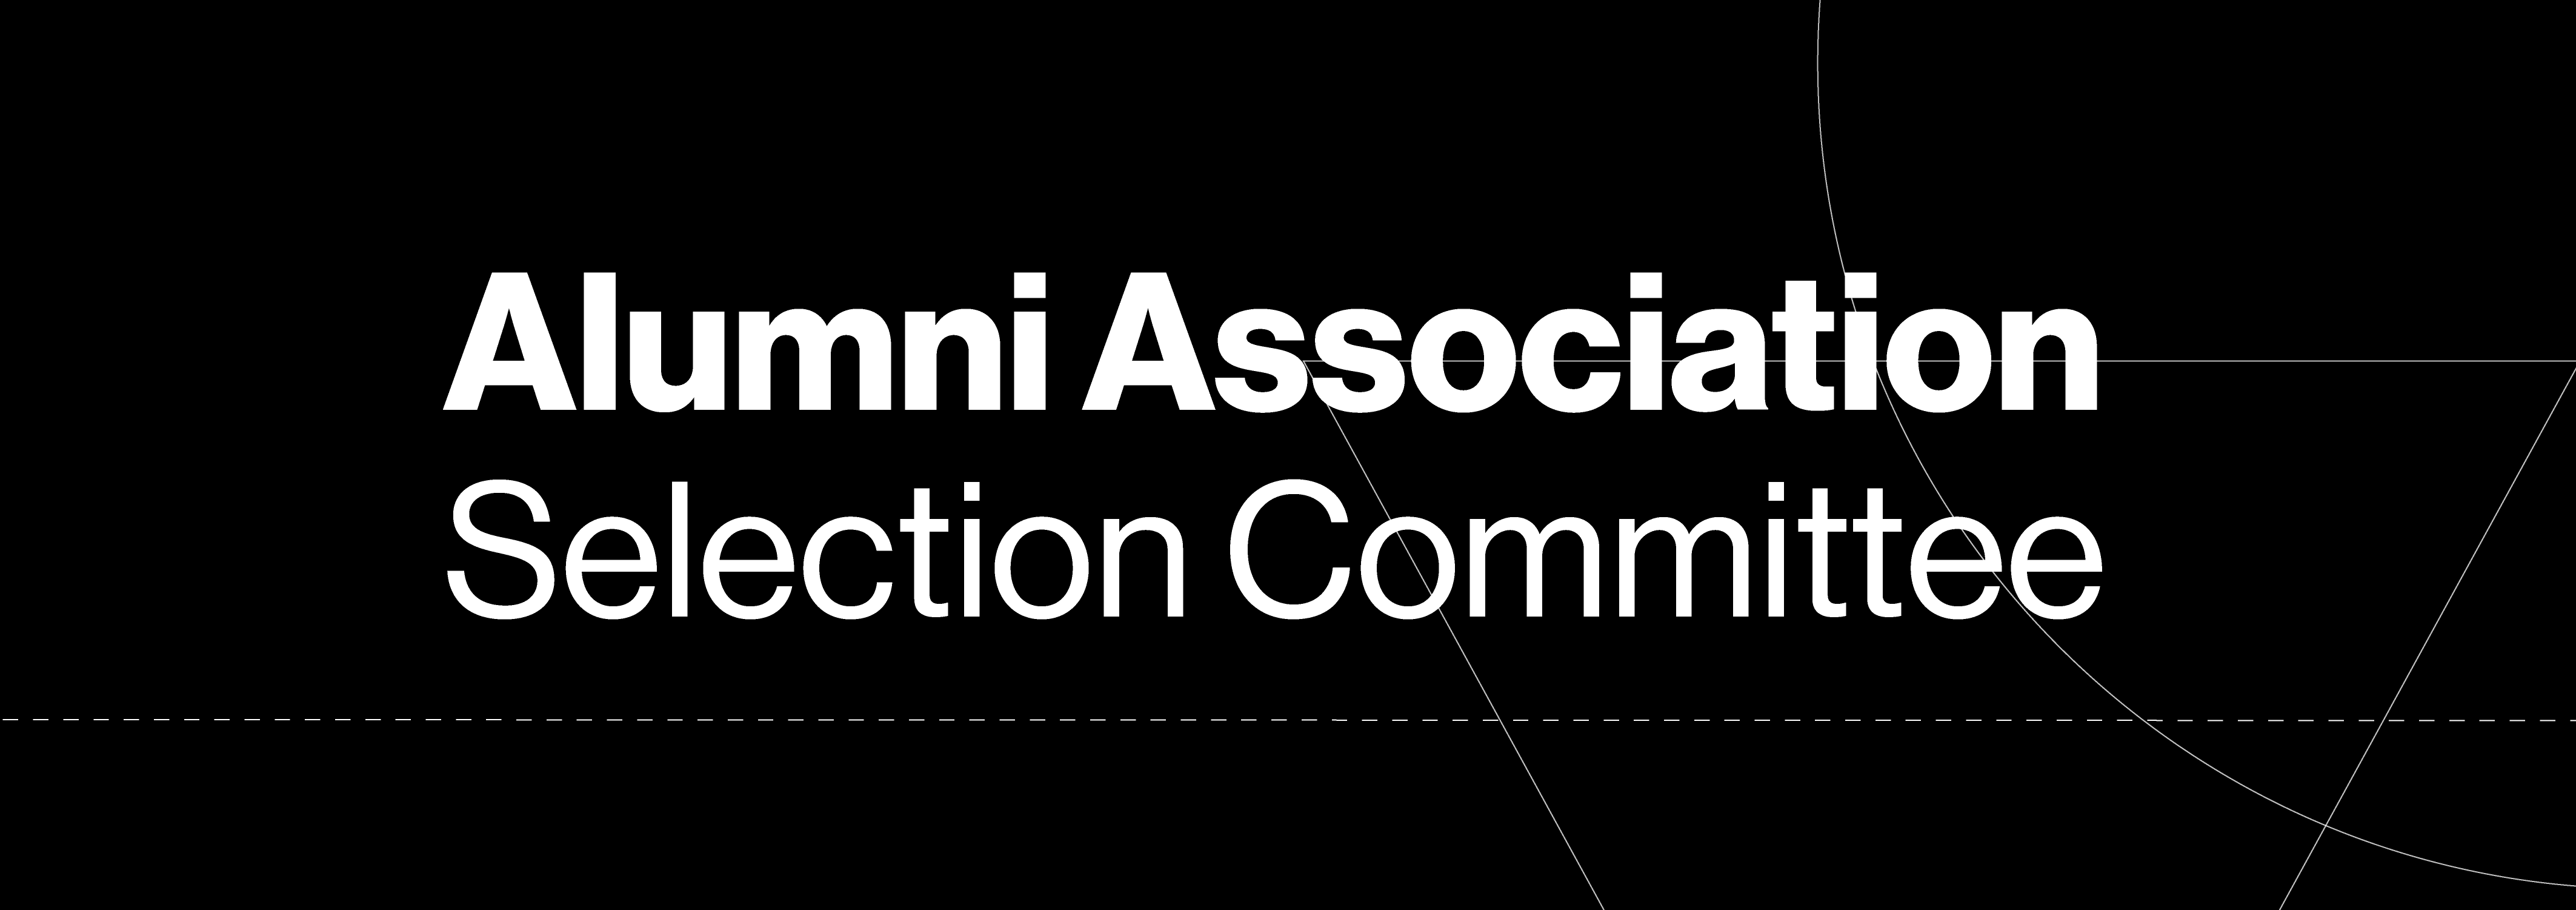 Alumni Association Selection Committee Ballot